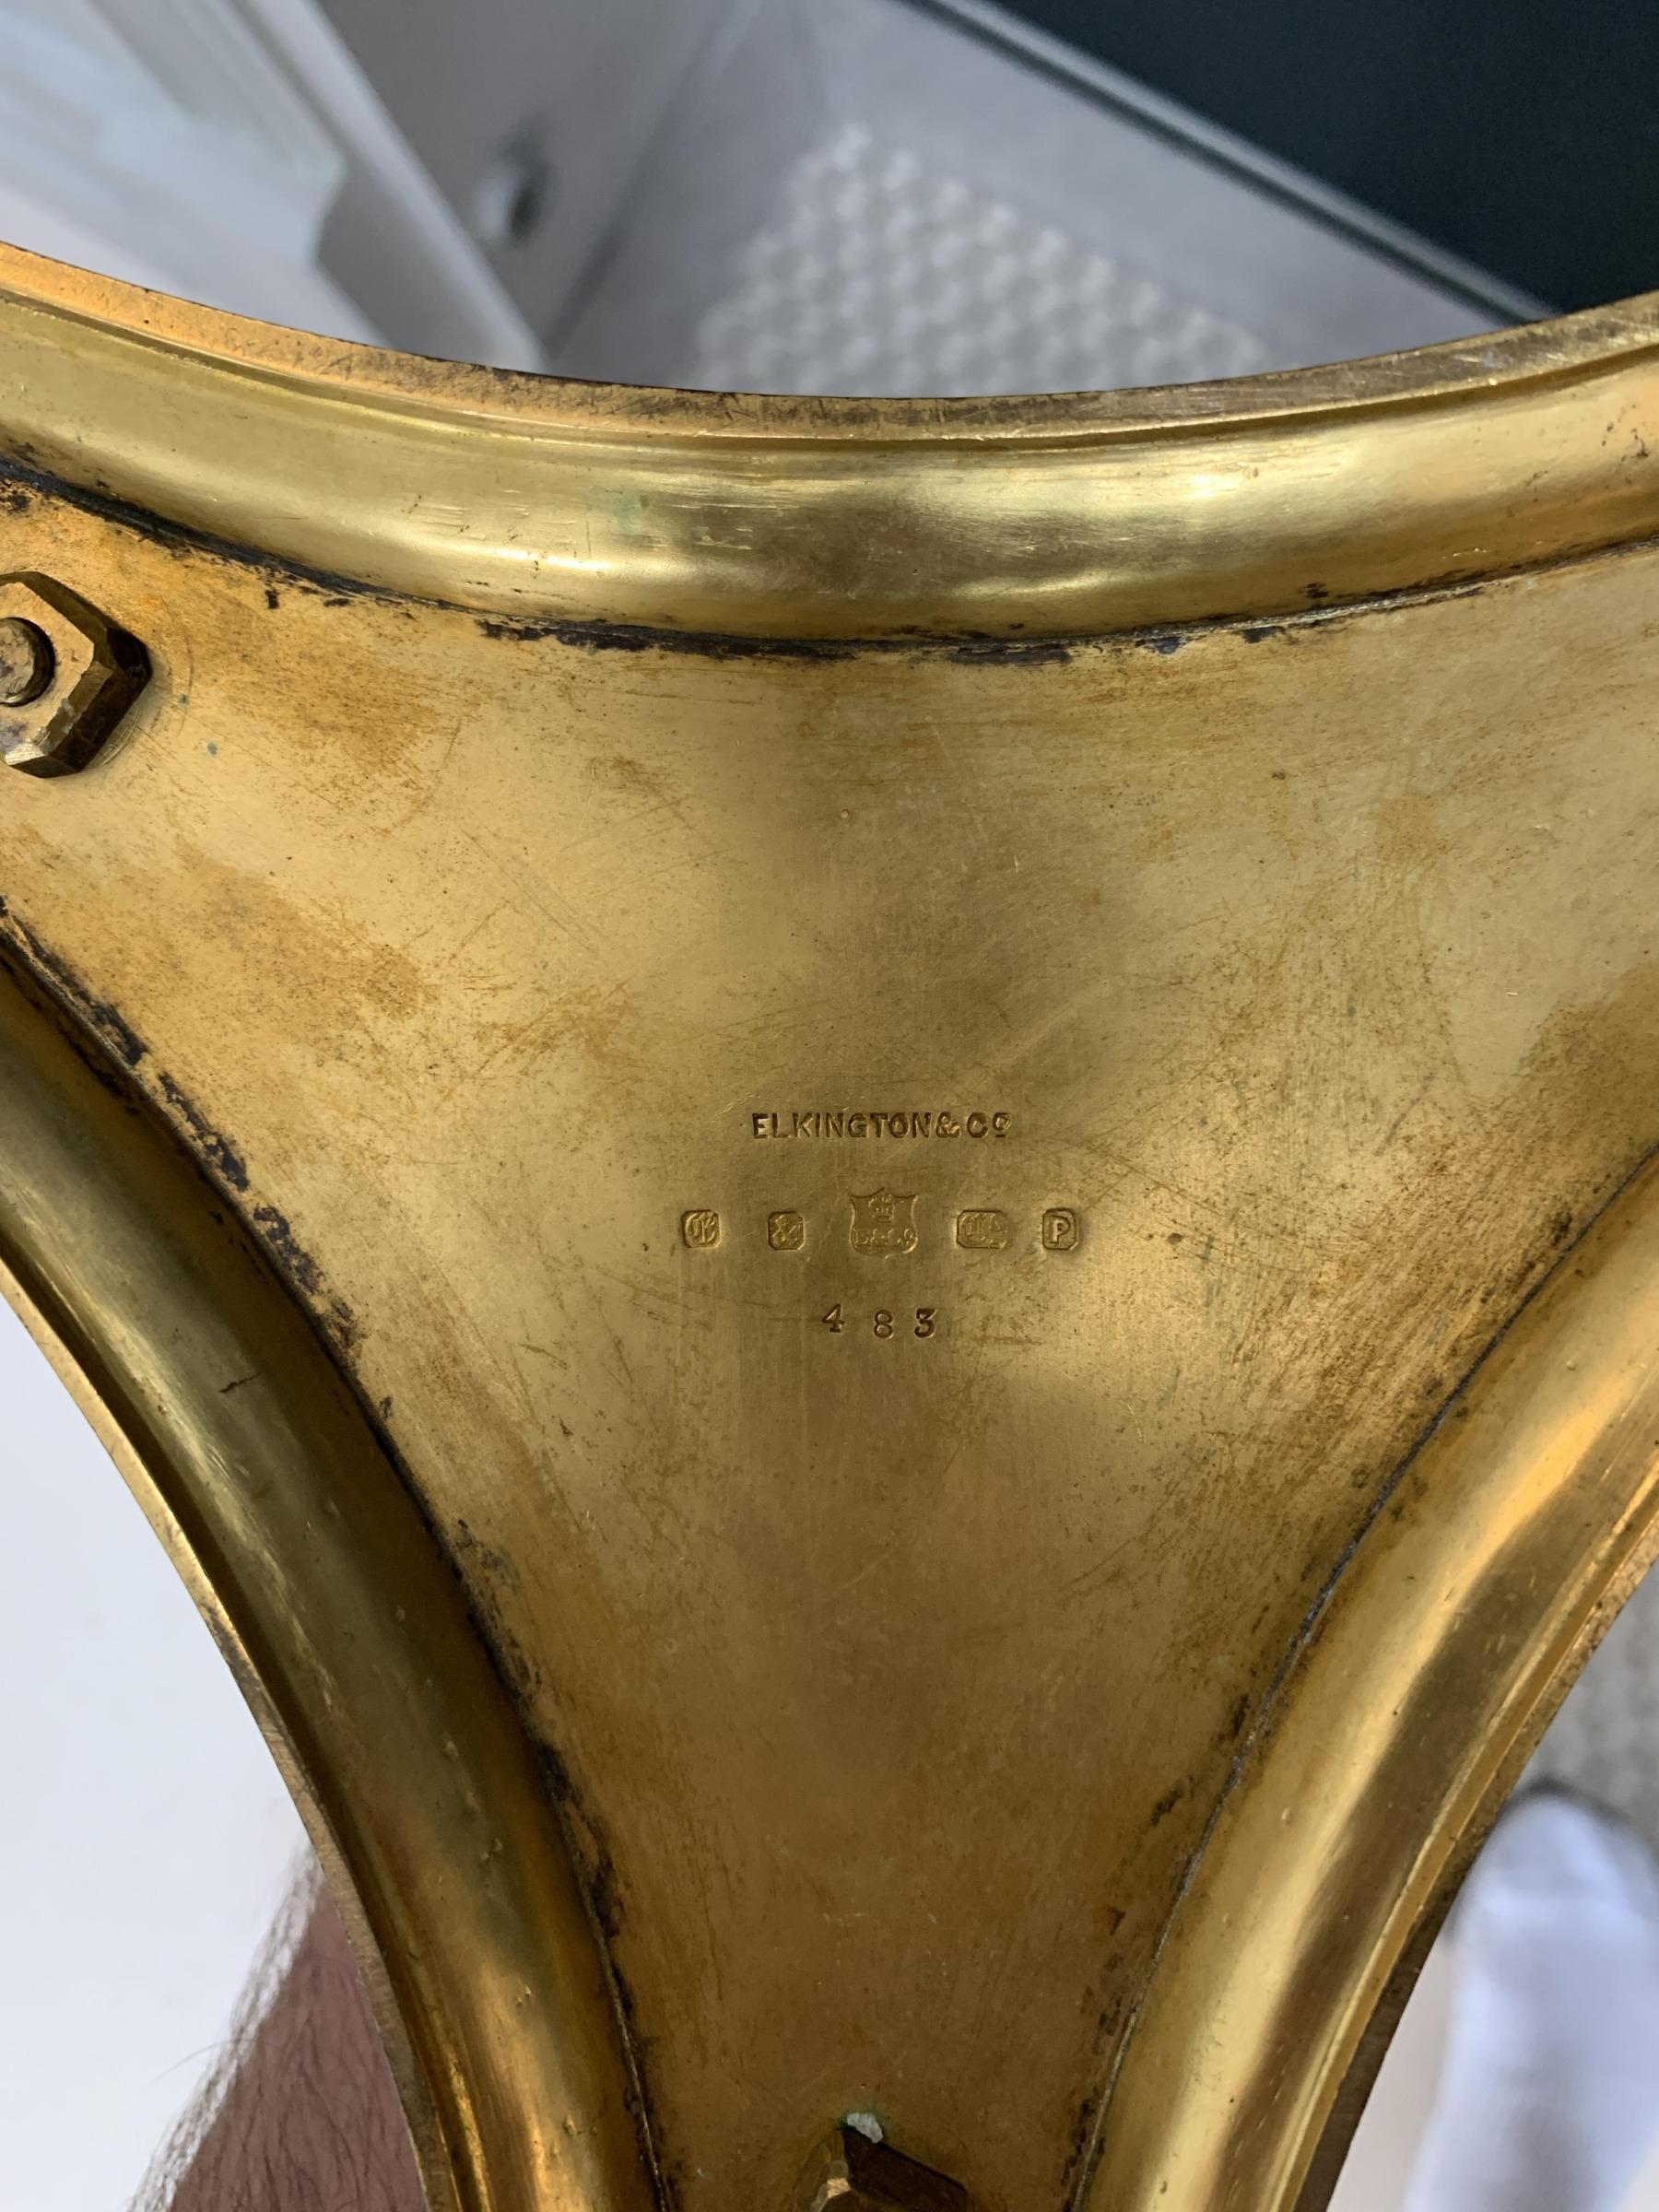 Elegant Pair of 19th Century Gilt Brass Candelabra by Elkington & Co 2